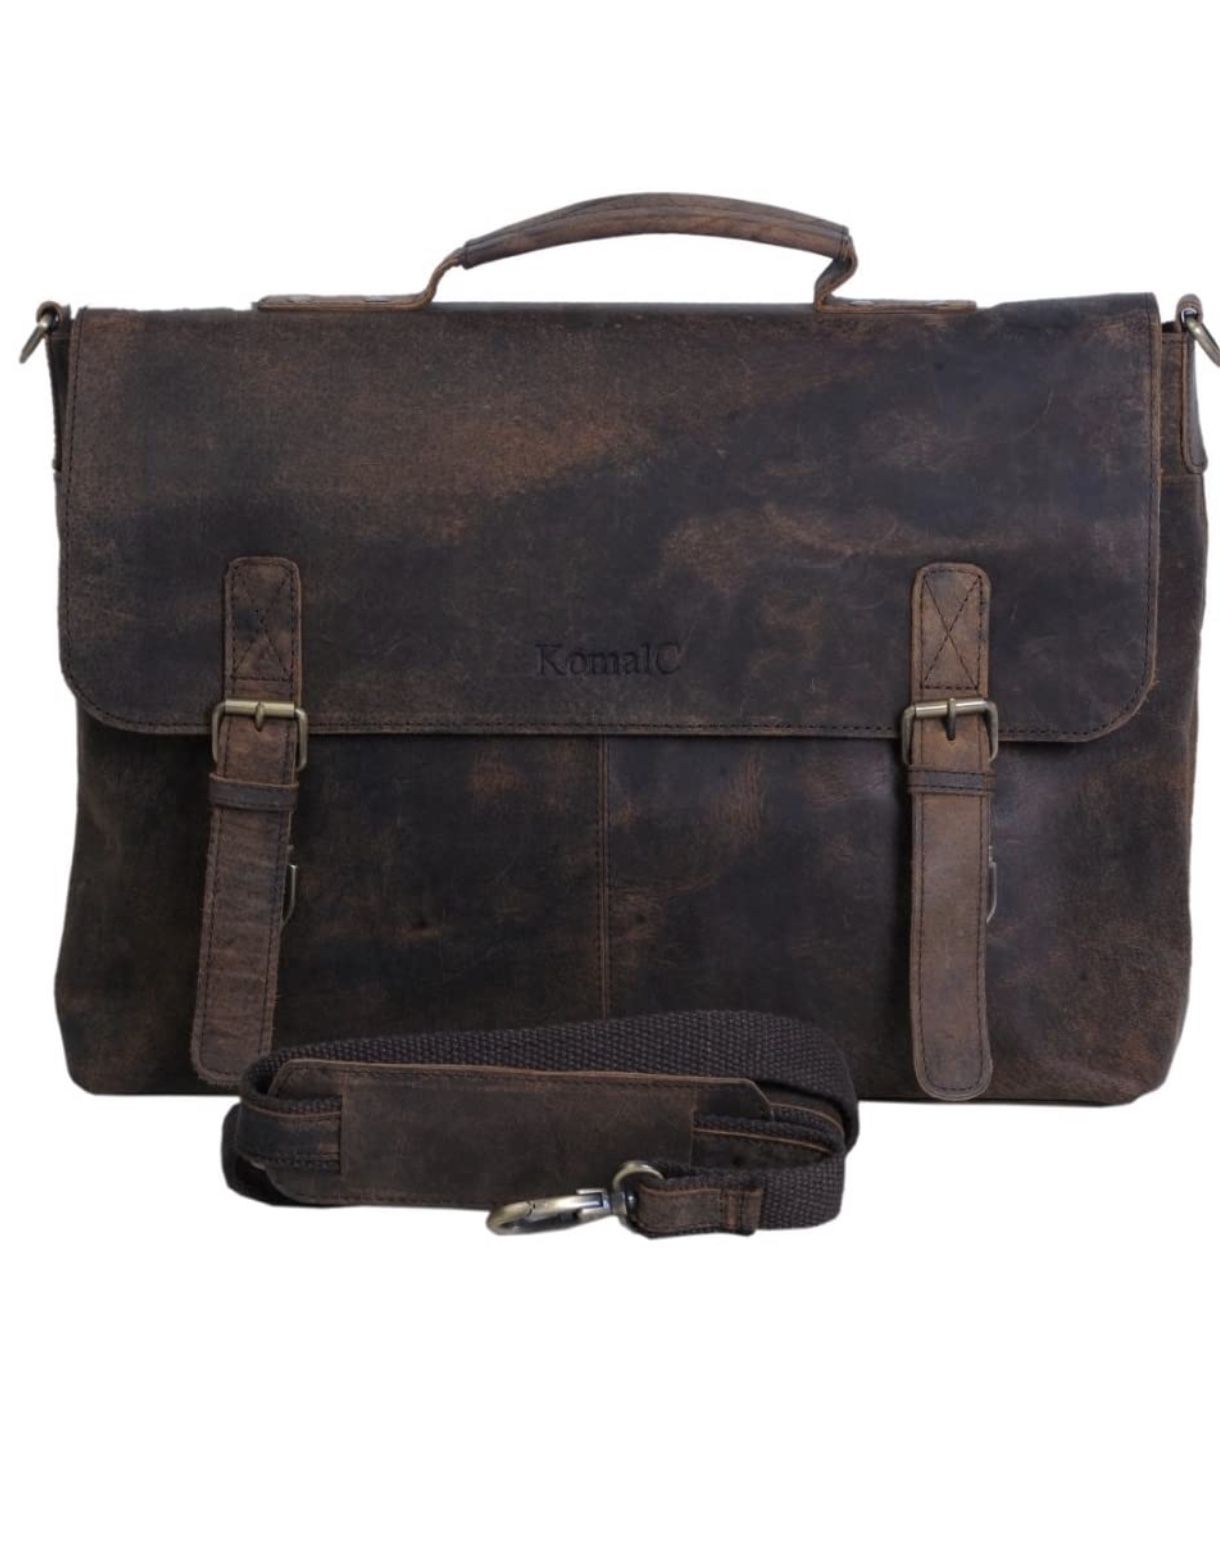 Genuine leather rustic travel/laptop/work bag (unisex)